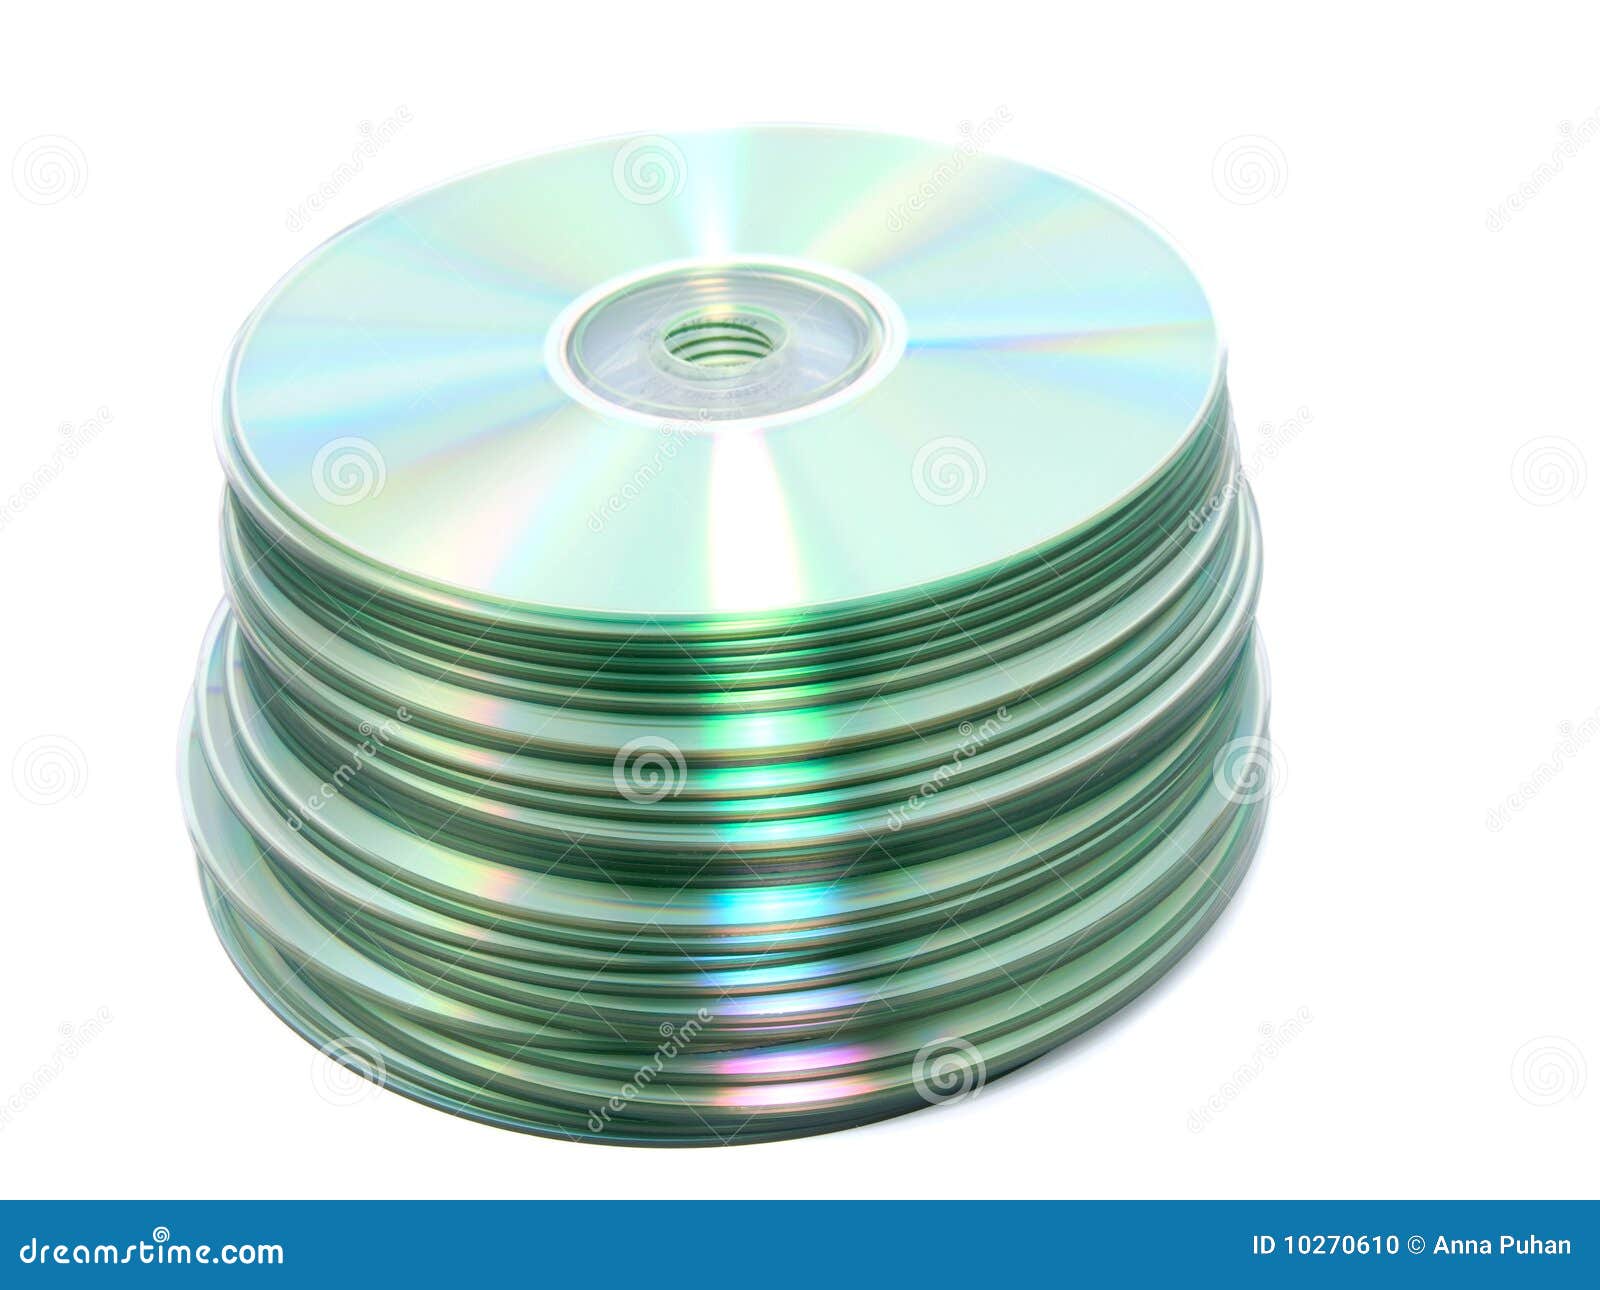 CD Stack Stock Photo - Image: 10270610